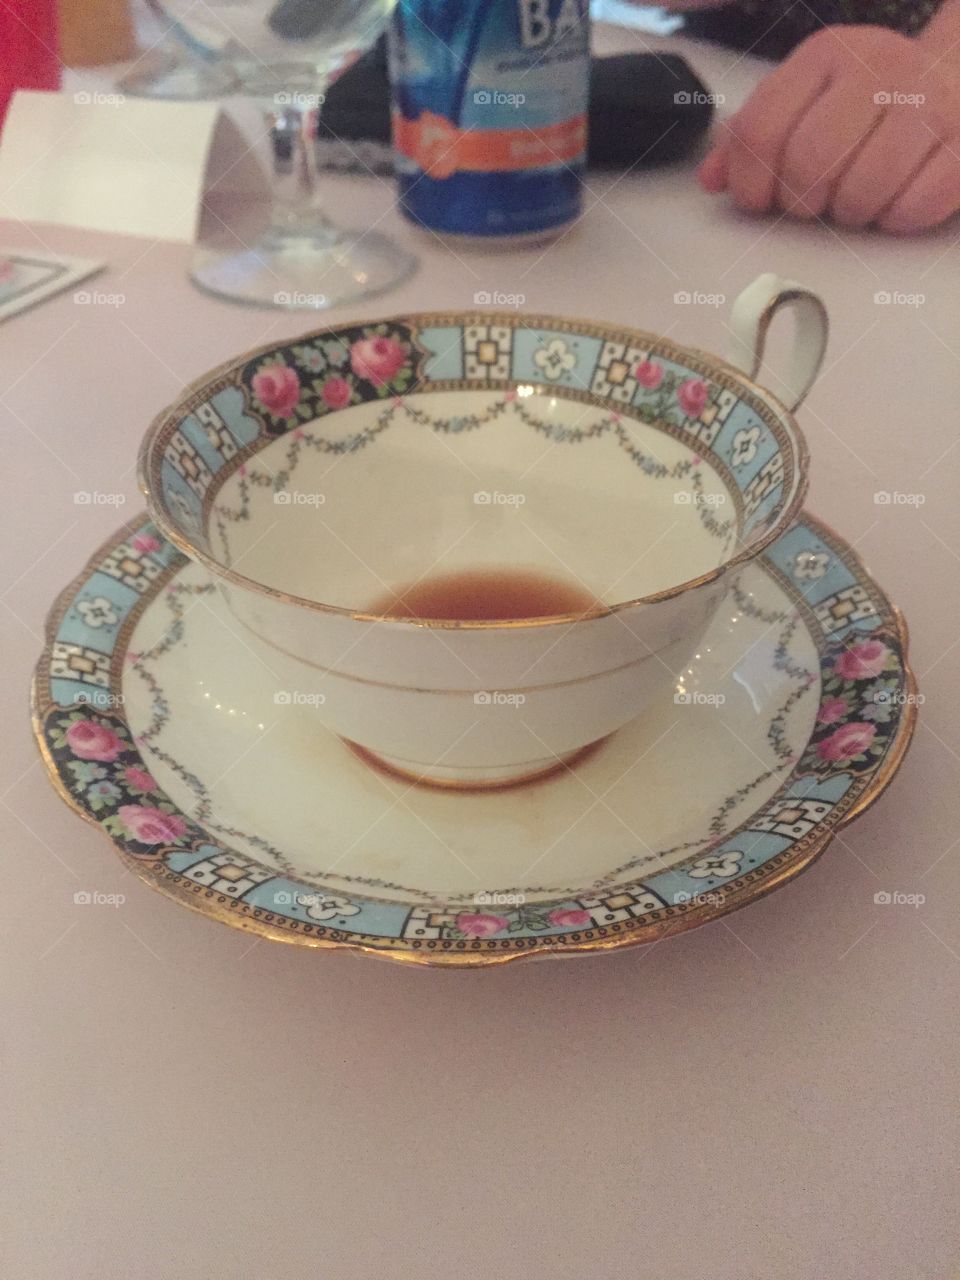 Little teacup